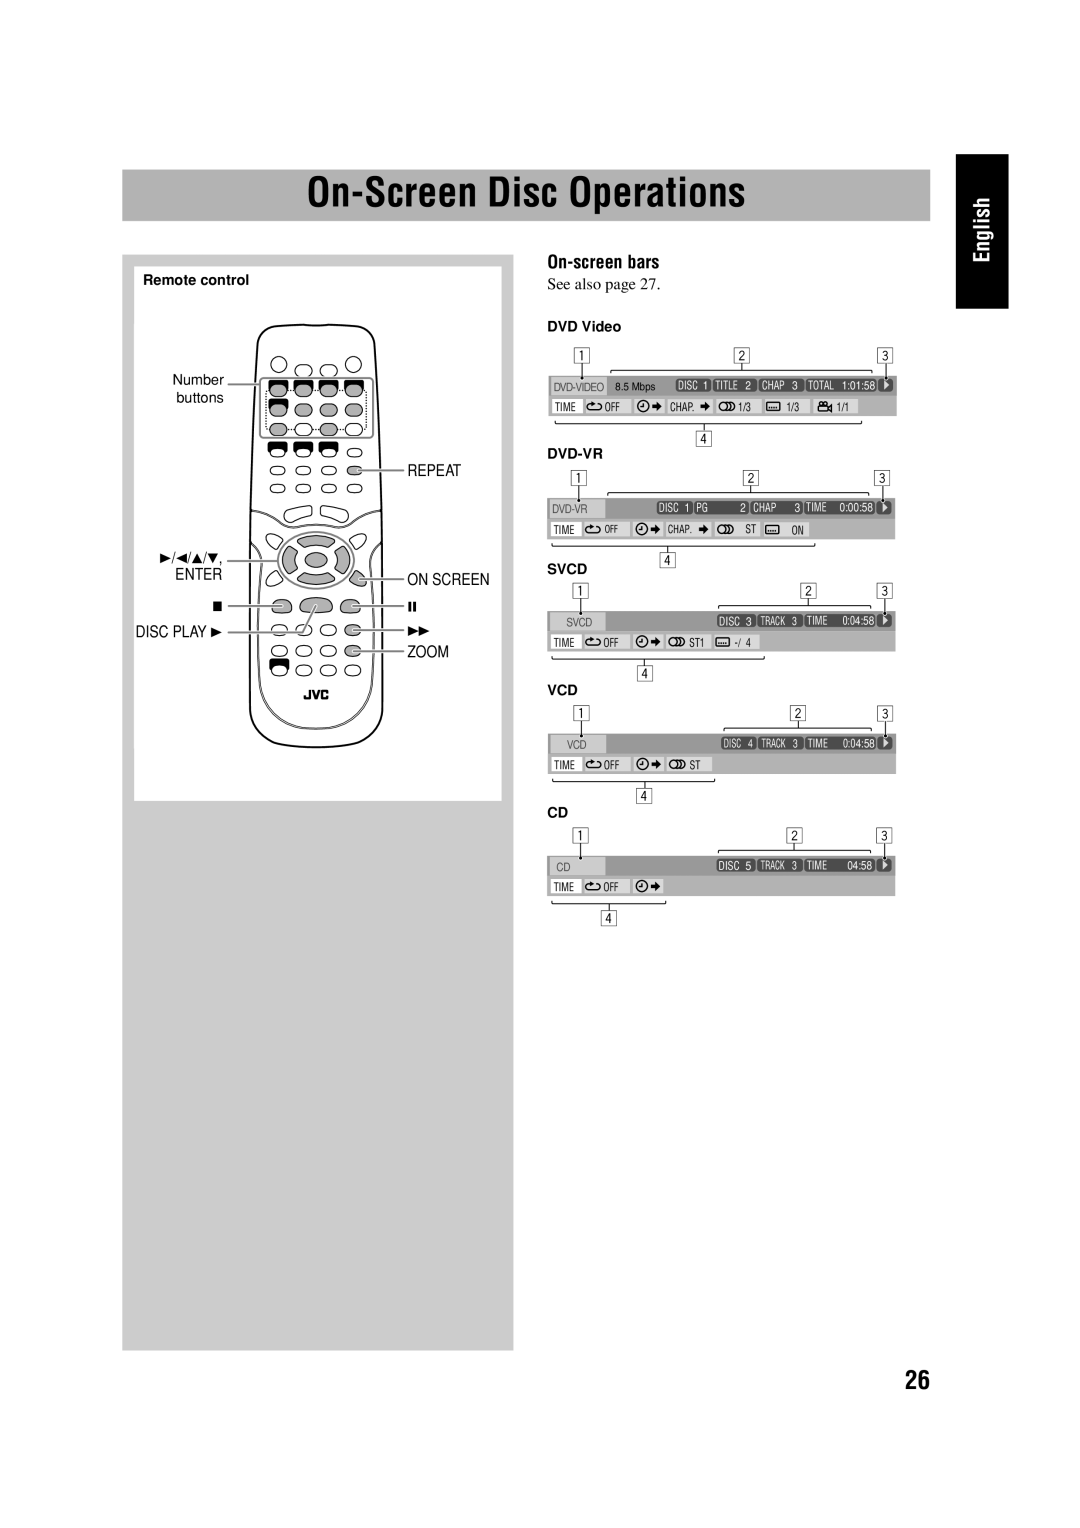 JVC HX-D77 manual On-ScreenDisc Operations, English, On-screenbars 